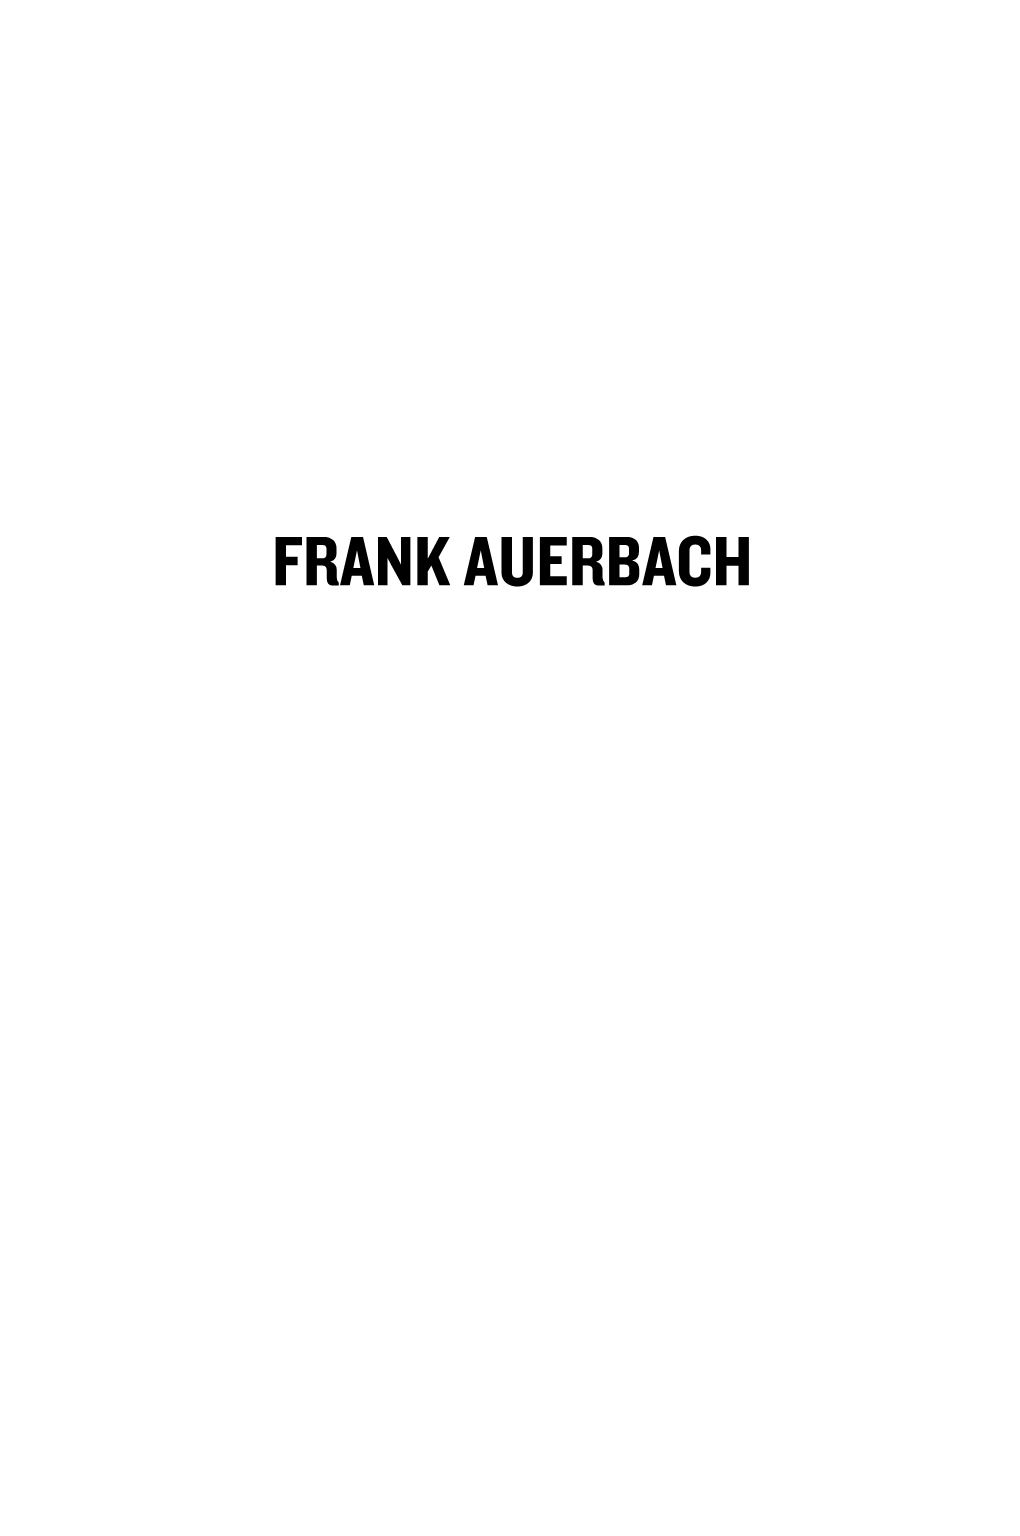 Frank Auerbach Catherine Lampert